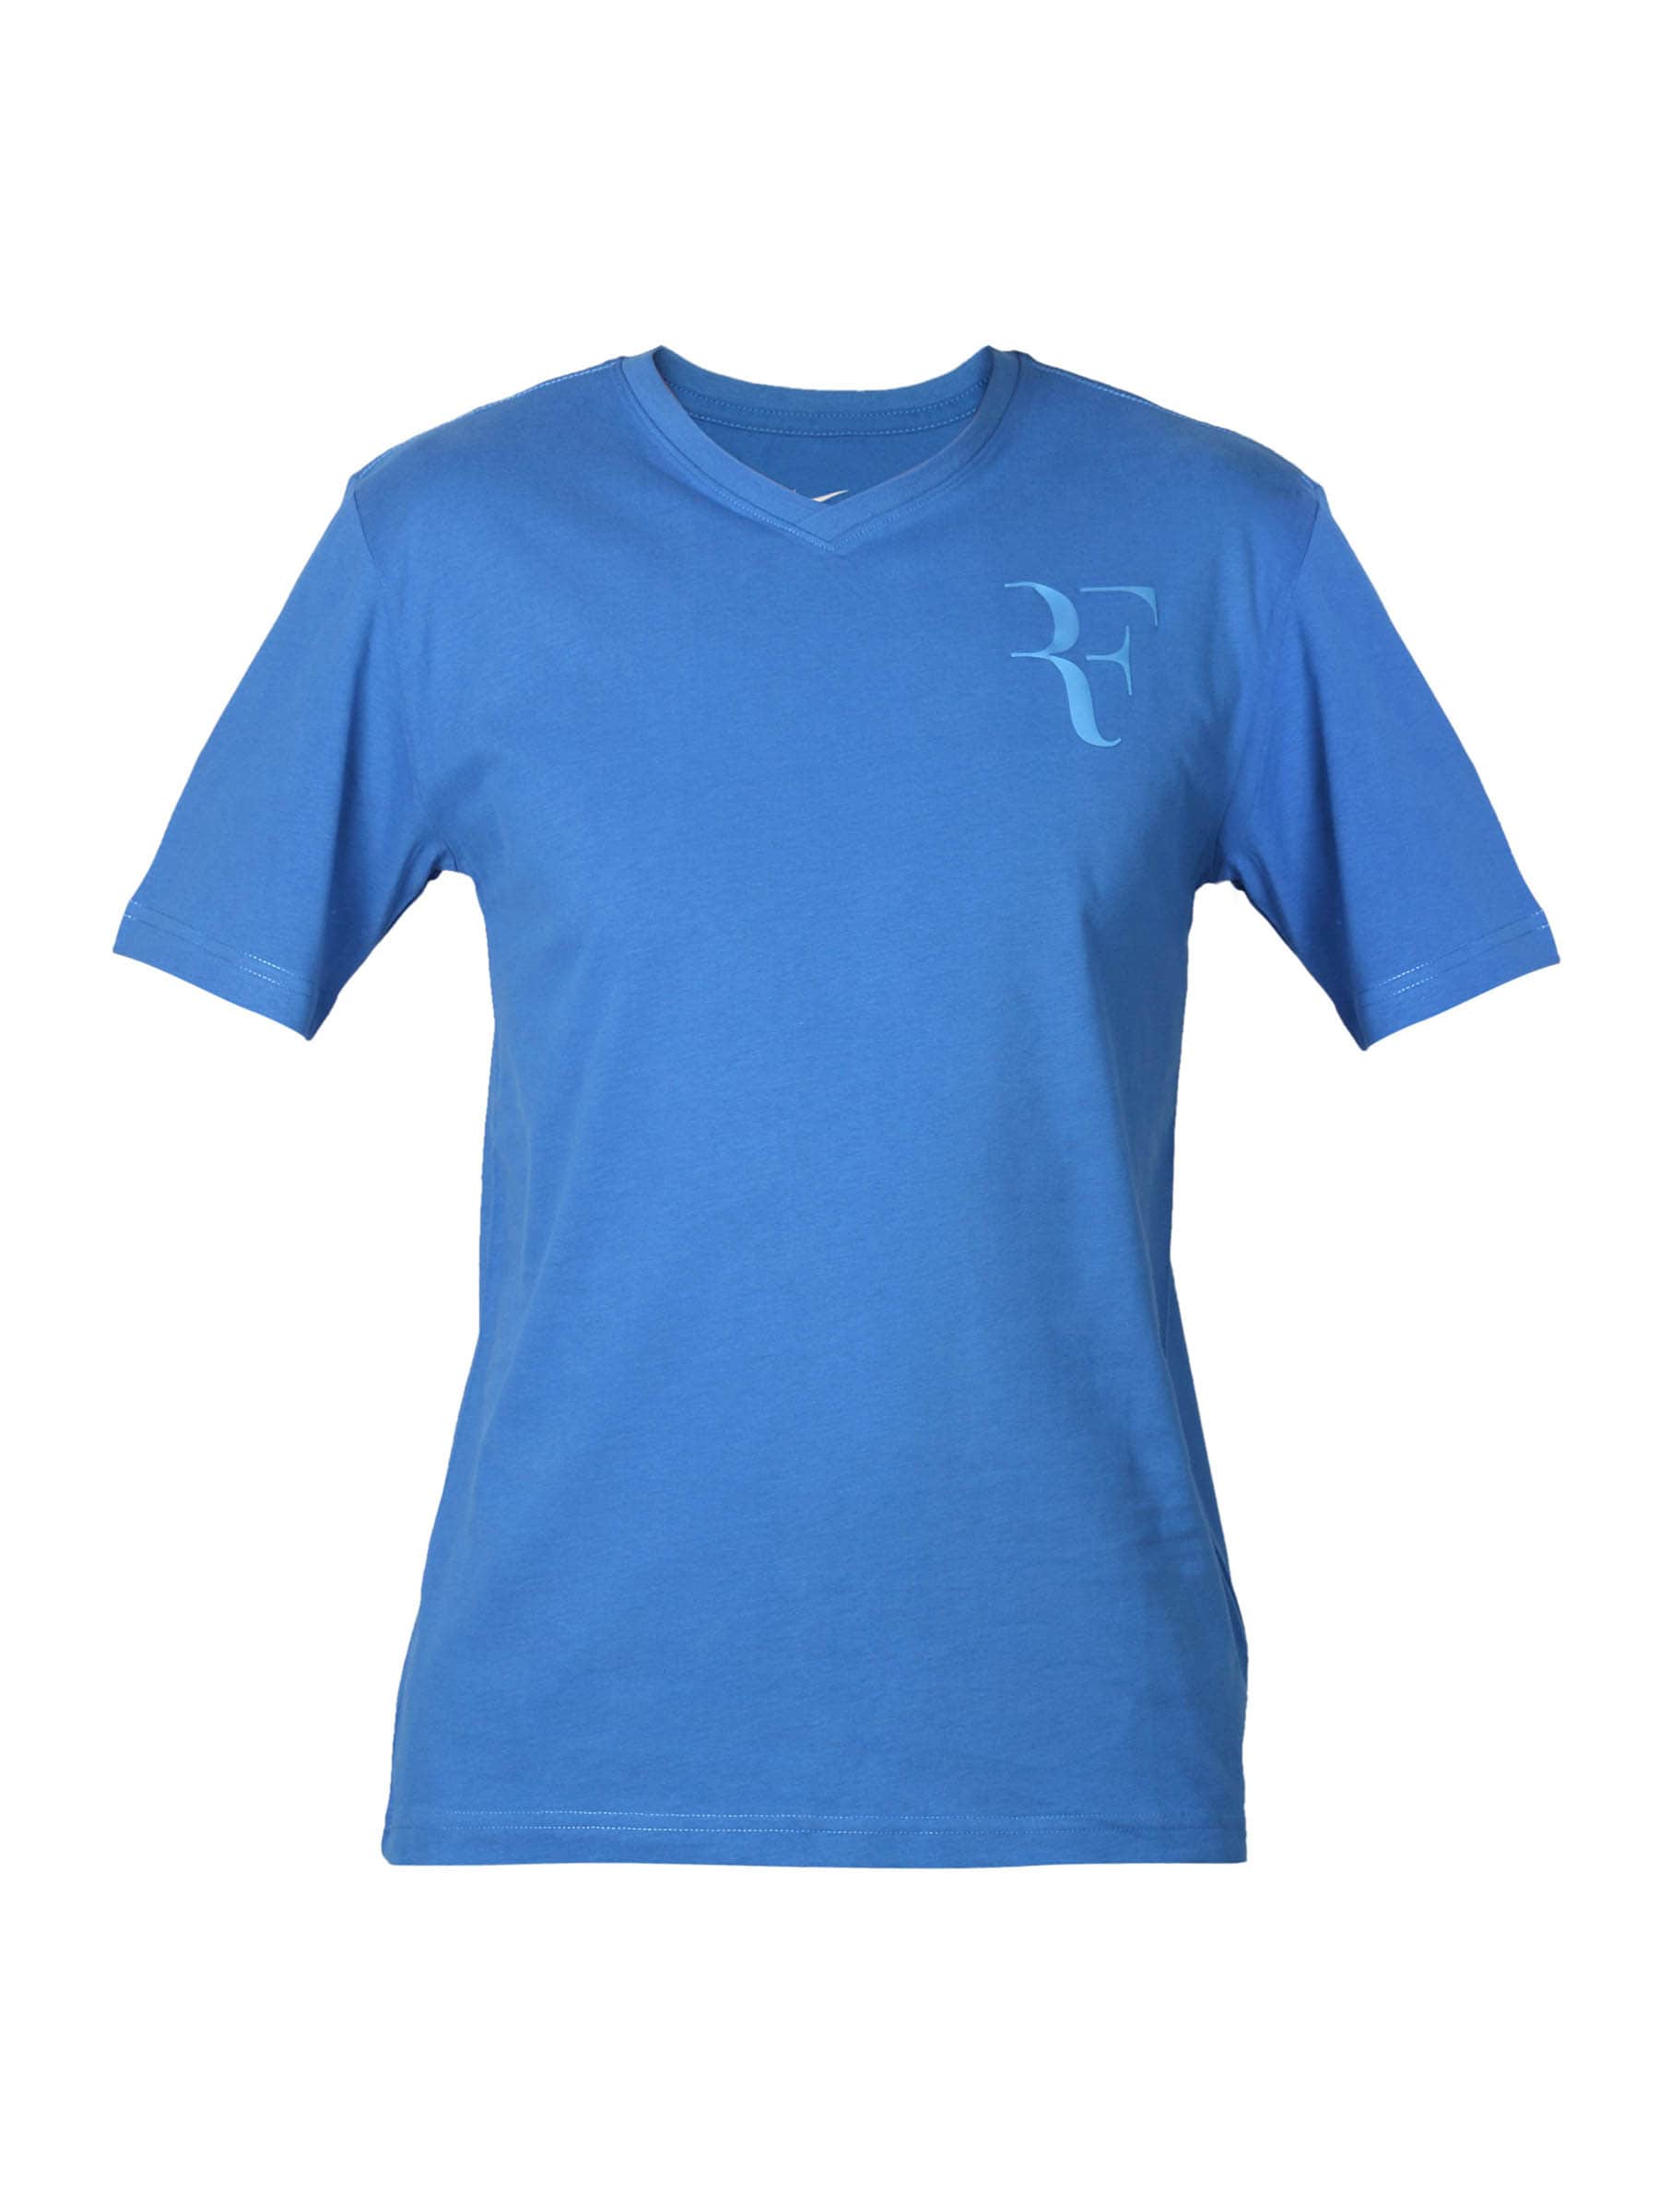 Nike Men Blue RF Blue T-shirt